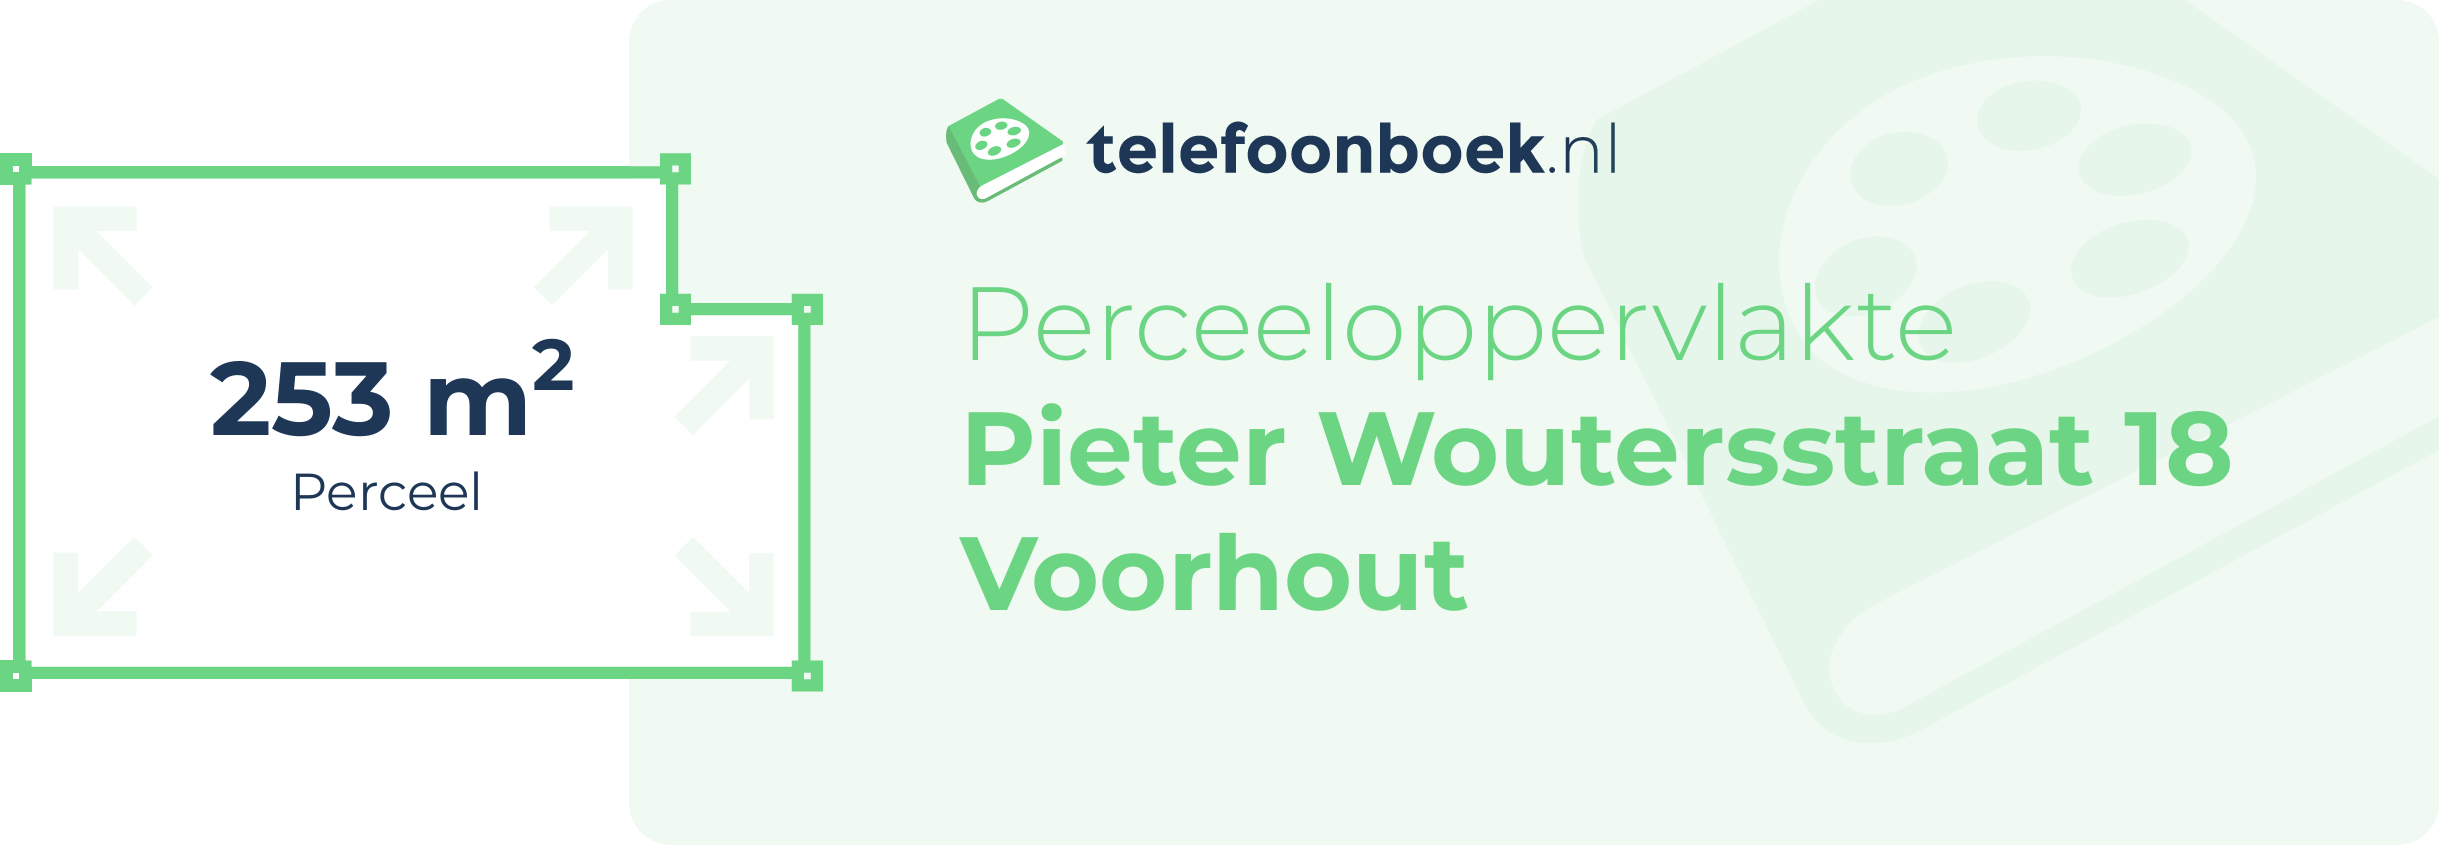 Perceeloppervlakte Pieter Woutersstraat 18 Voorhout